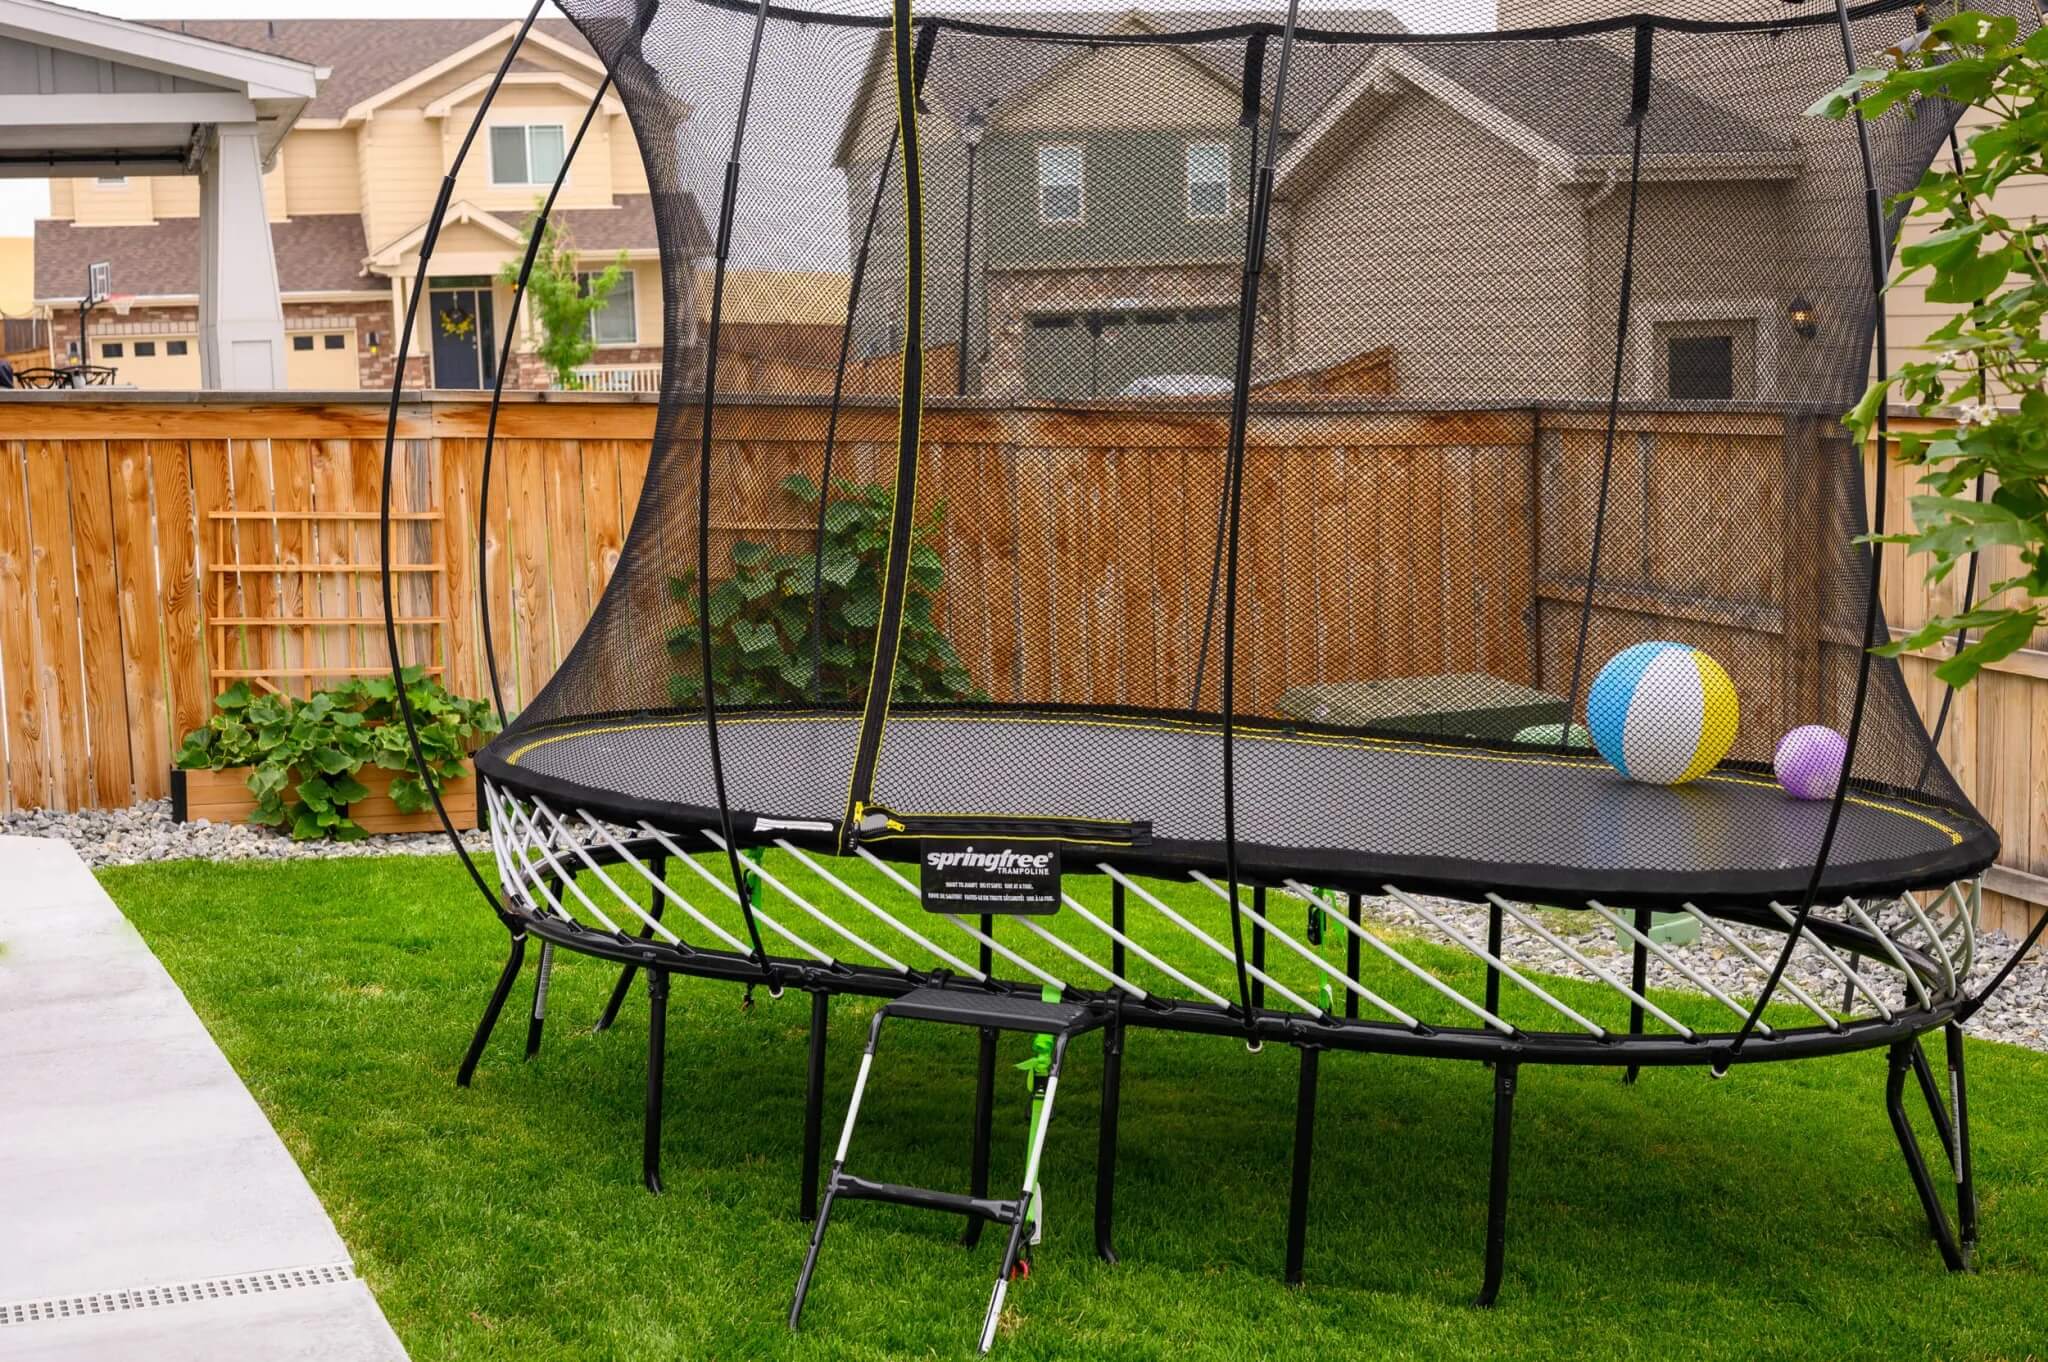 Spring free trampoline 1